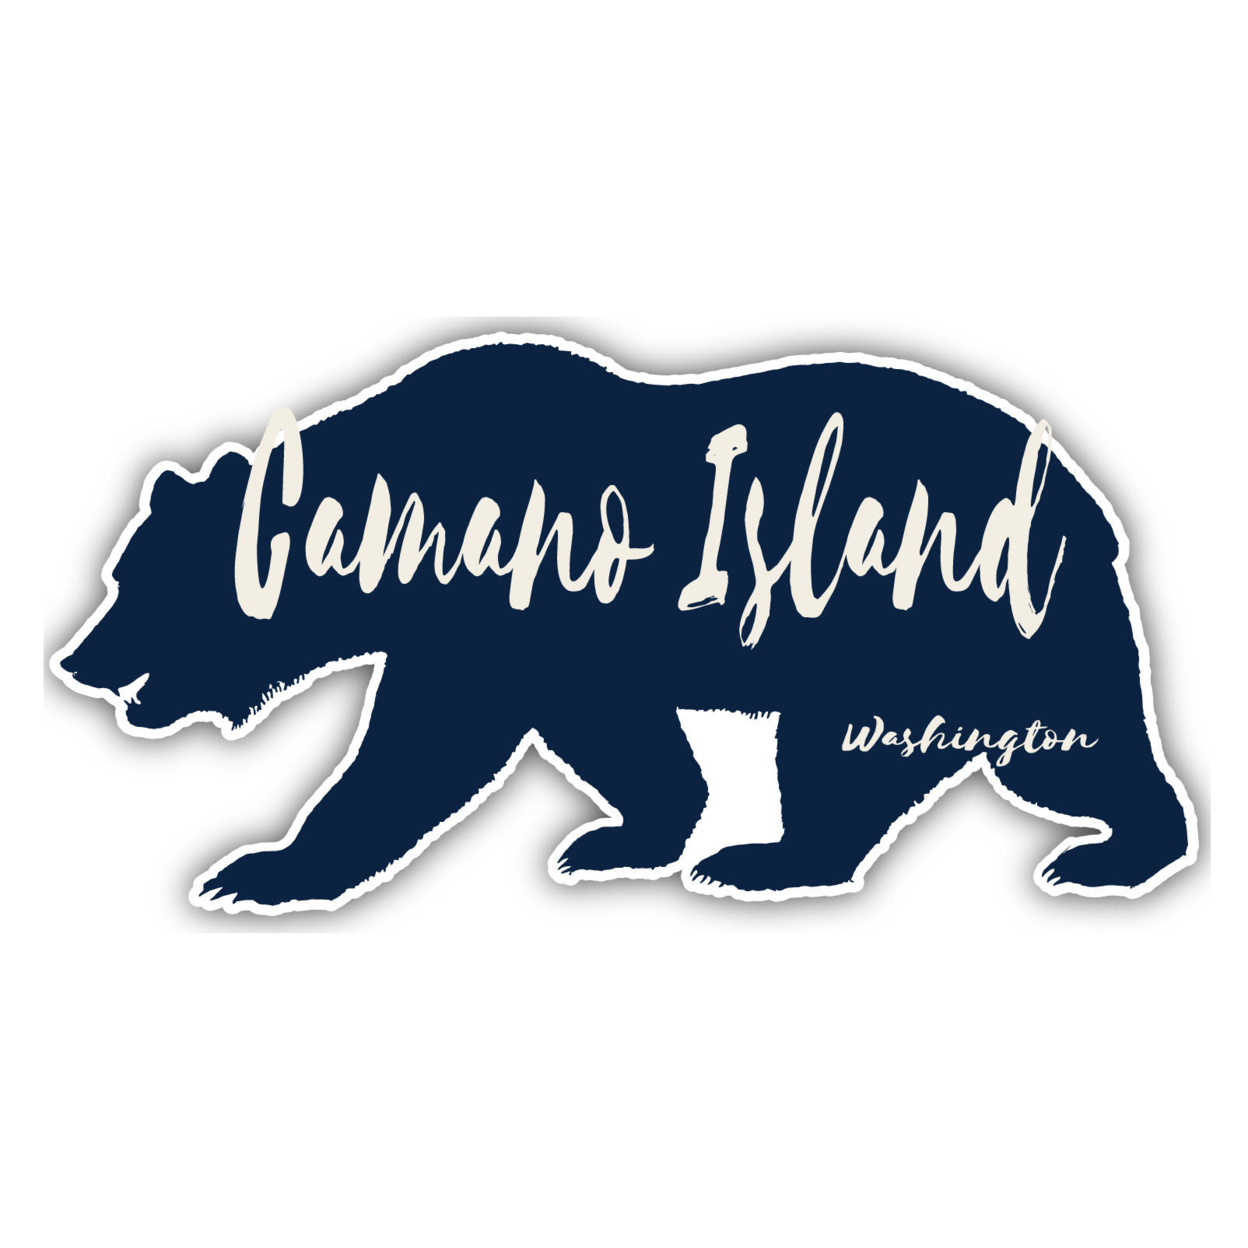 Camano Island Washington Souvenir Decorative Stickers (Choose Theme And Size) - 4-Pack, 2-Inch, Adventures Awaits